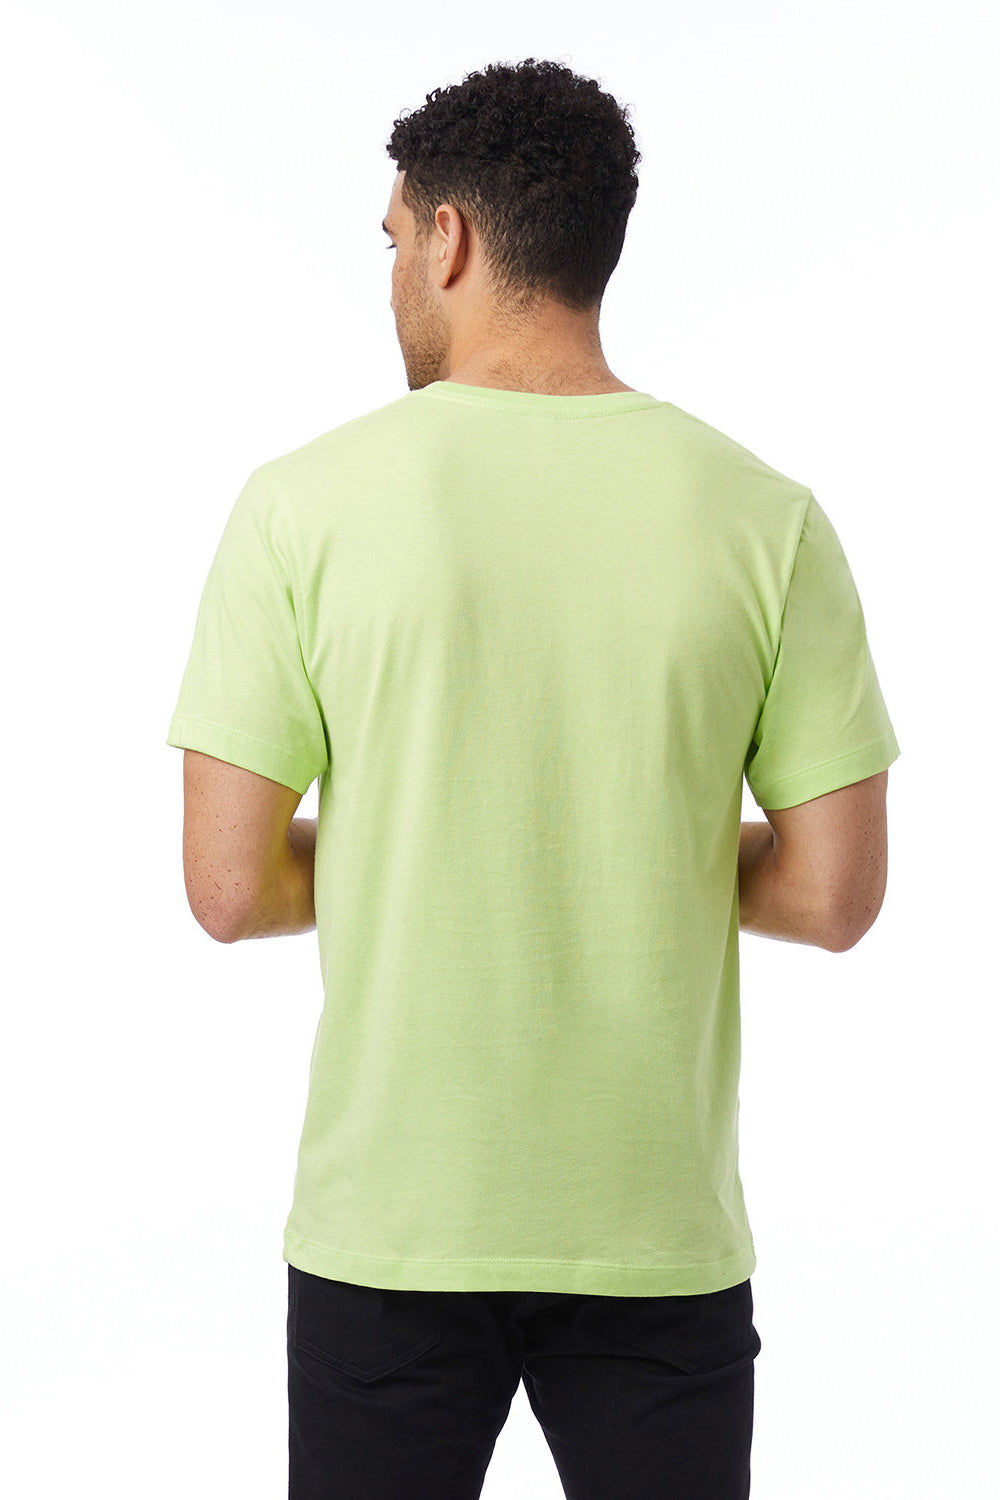 Alternative AA1070/1070 Mens Go To Jersey Short Sleeve Crewneck T-Shirt Highlighter Yellow Back